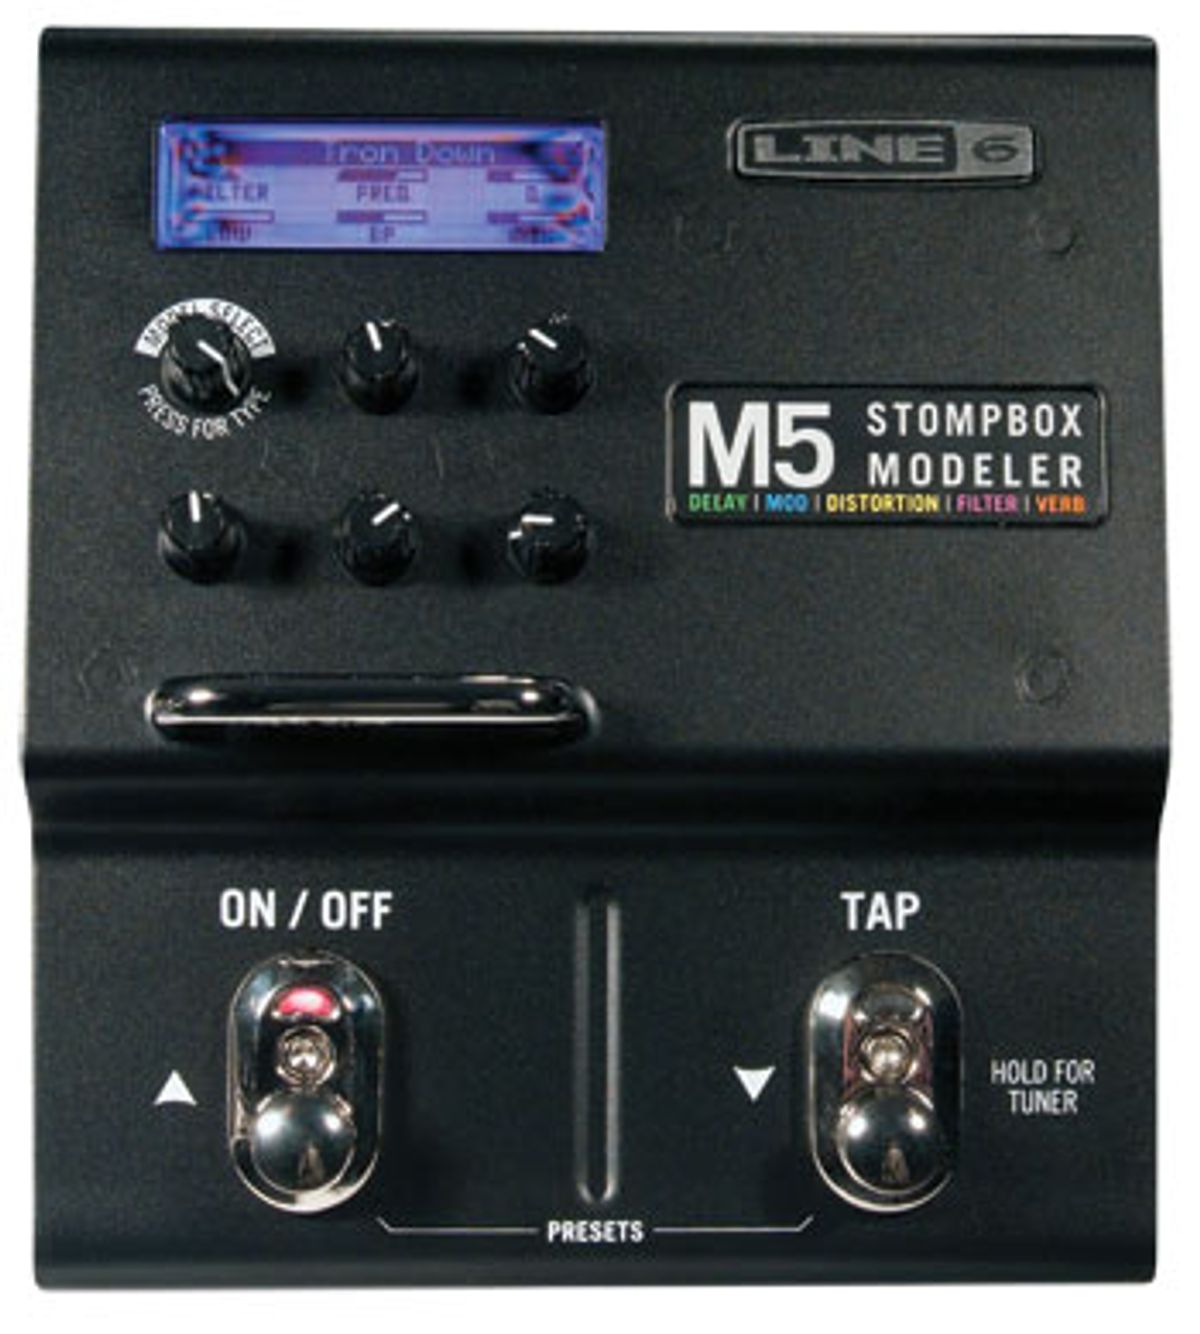 Line 6 M5 Stompbox Modeler Review